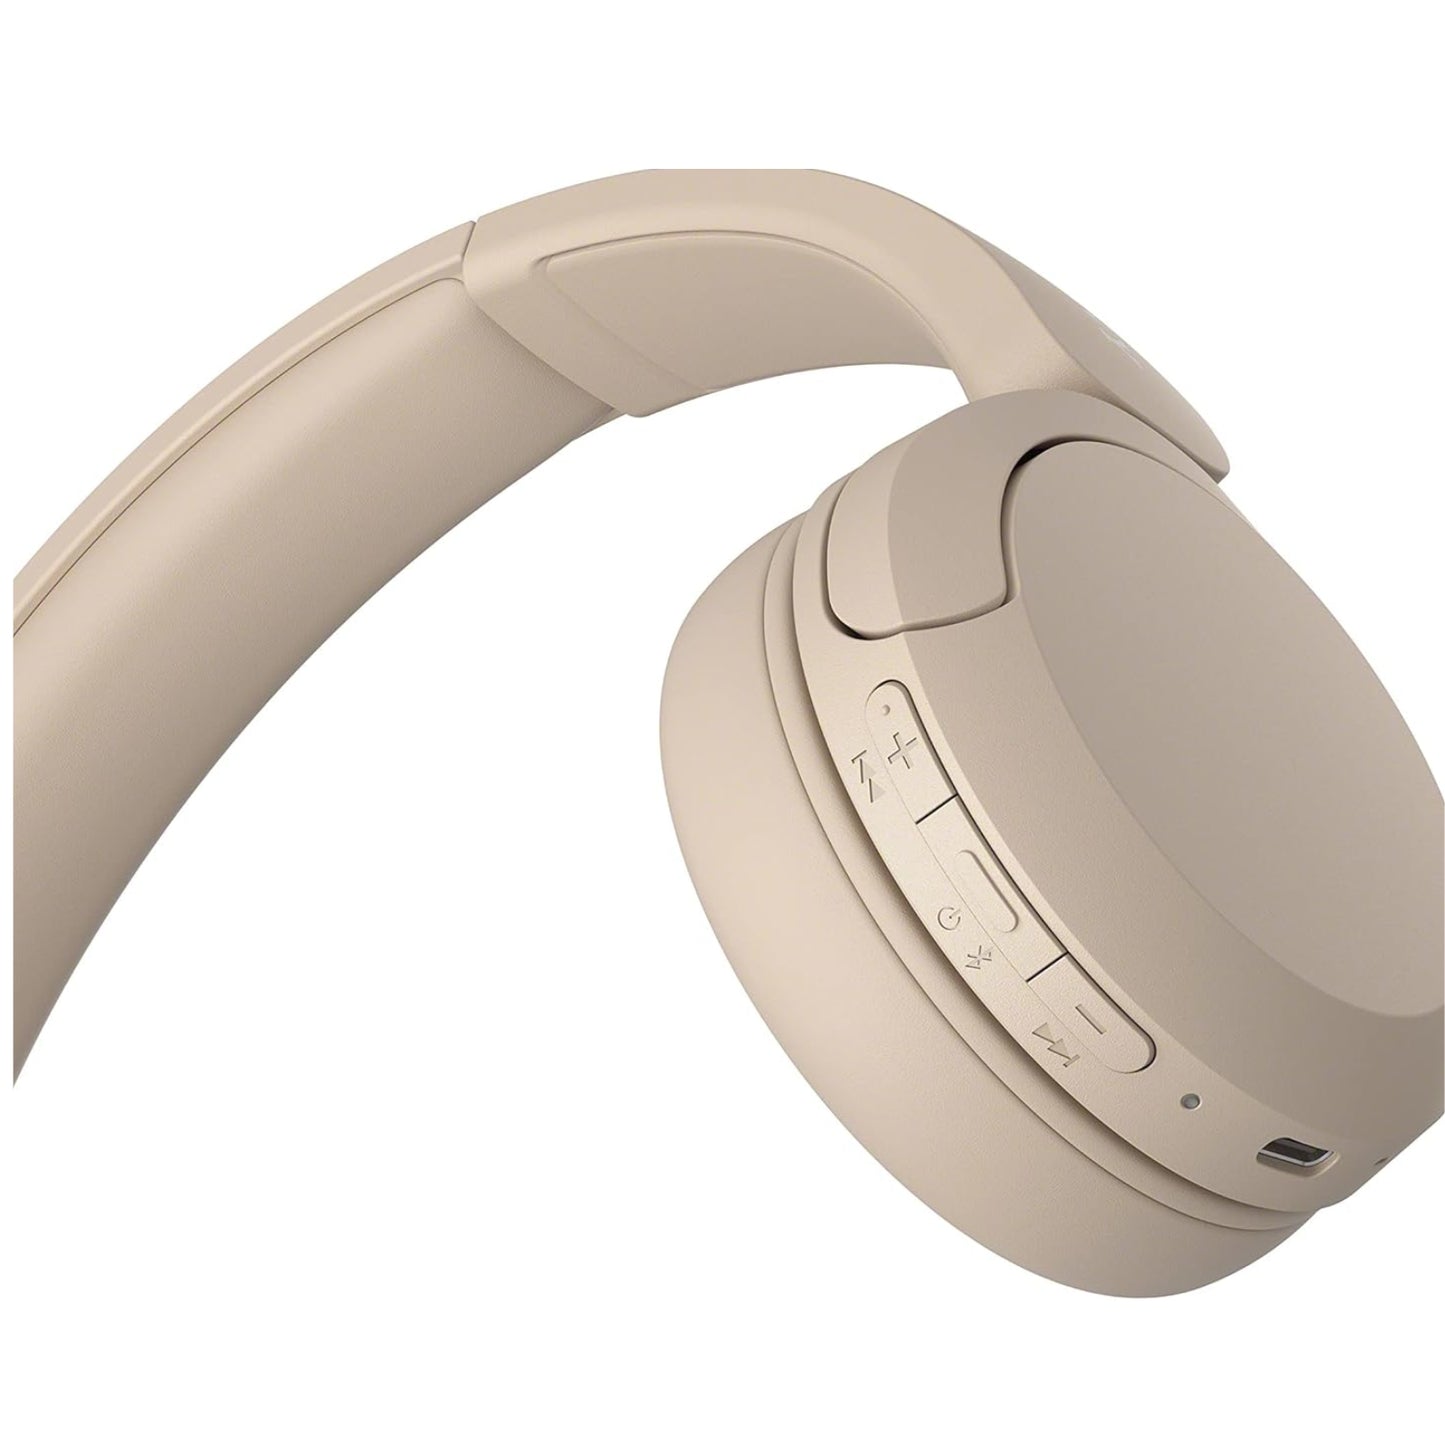 Sony WH-CH520 Wireless Over-Ear Headphone (Cream)